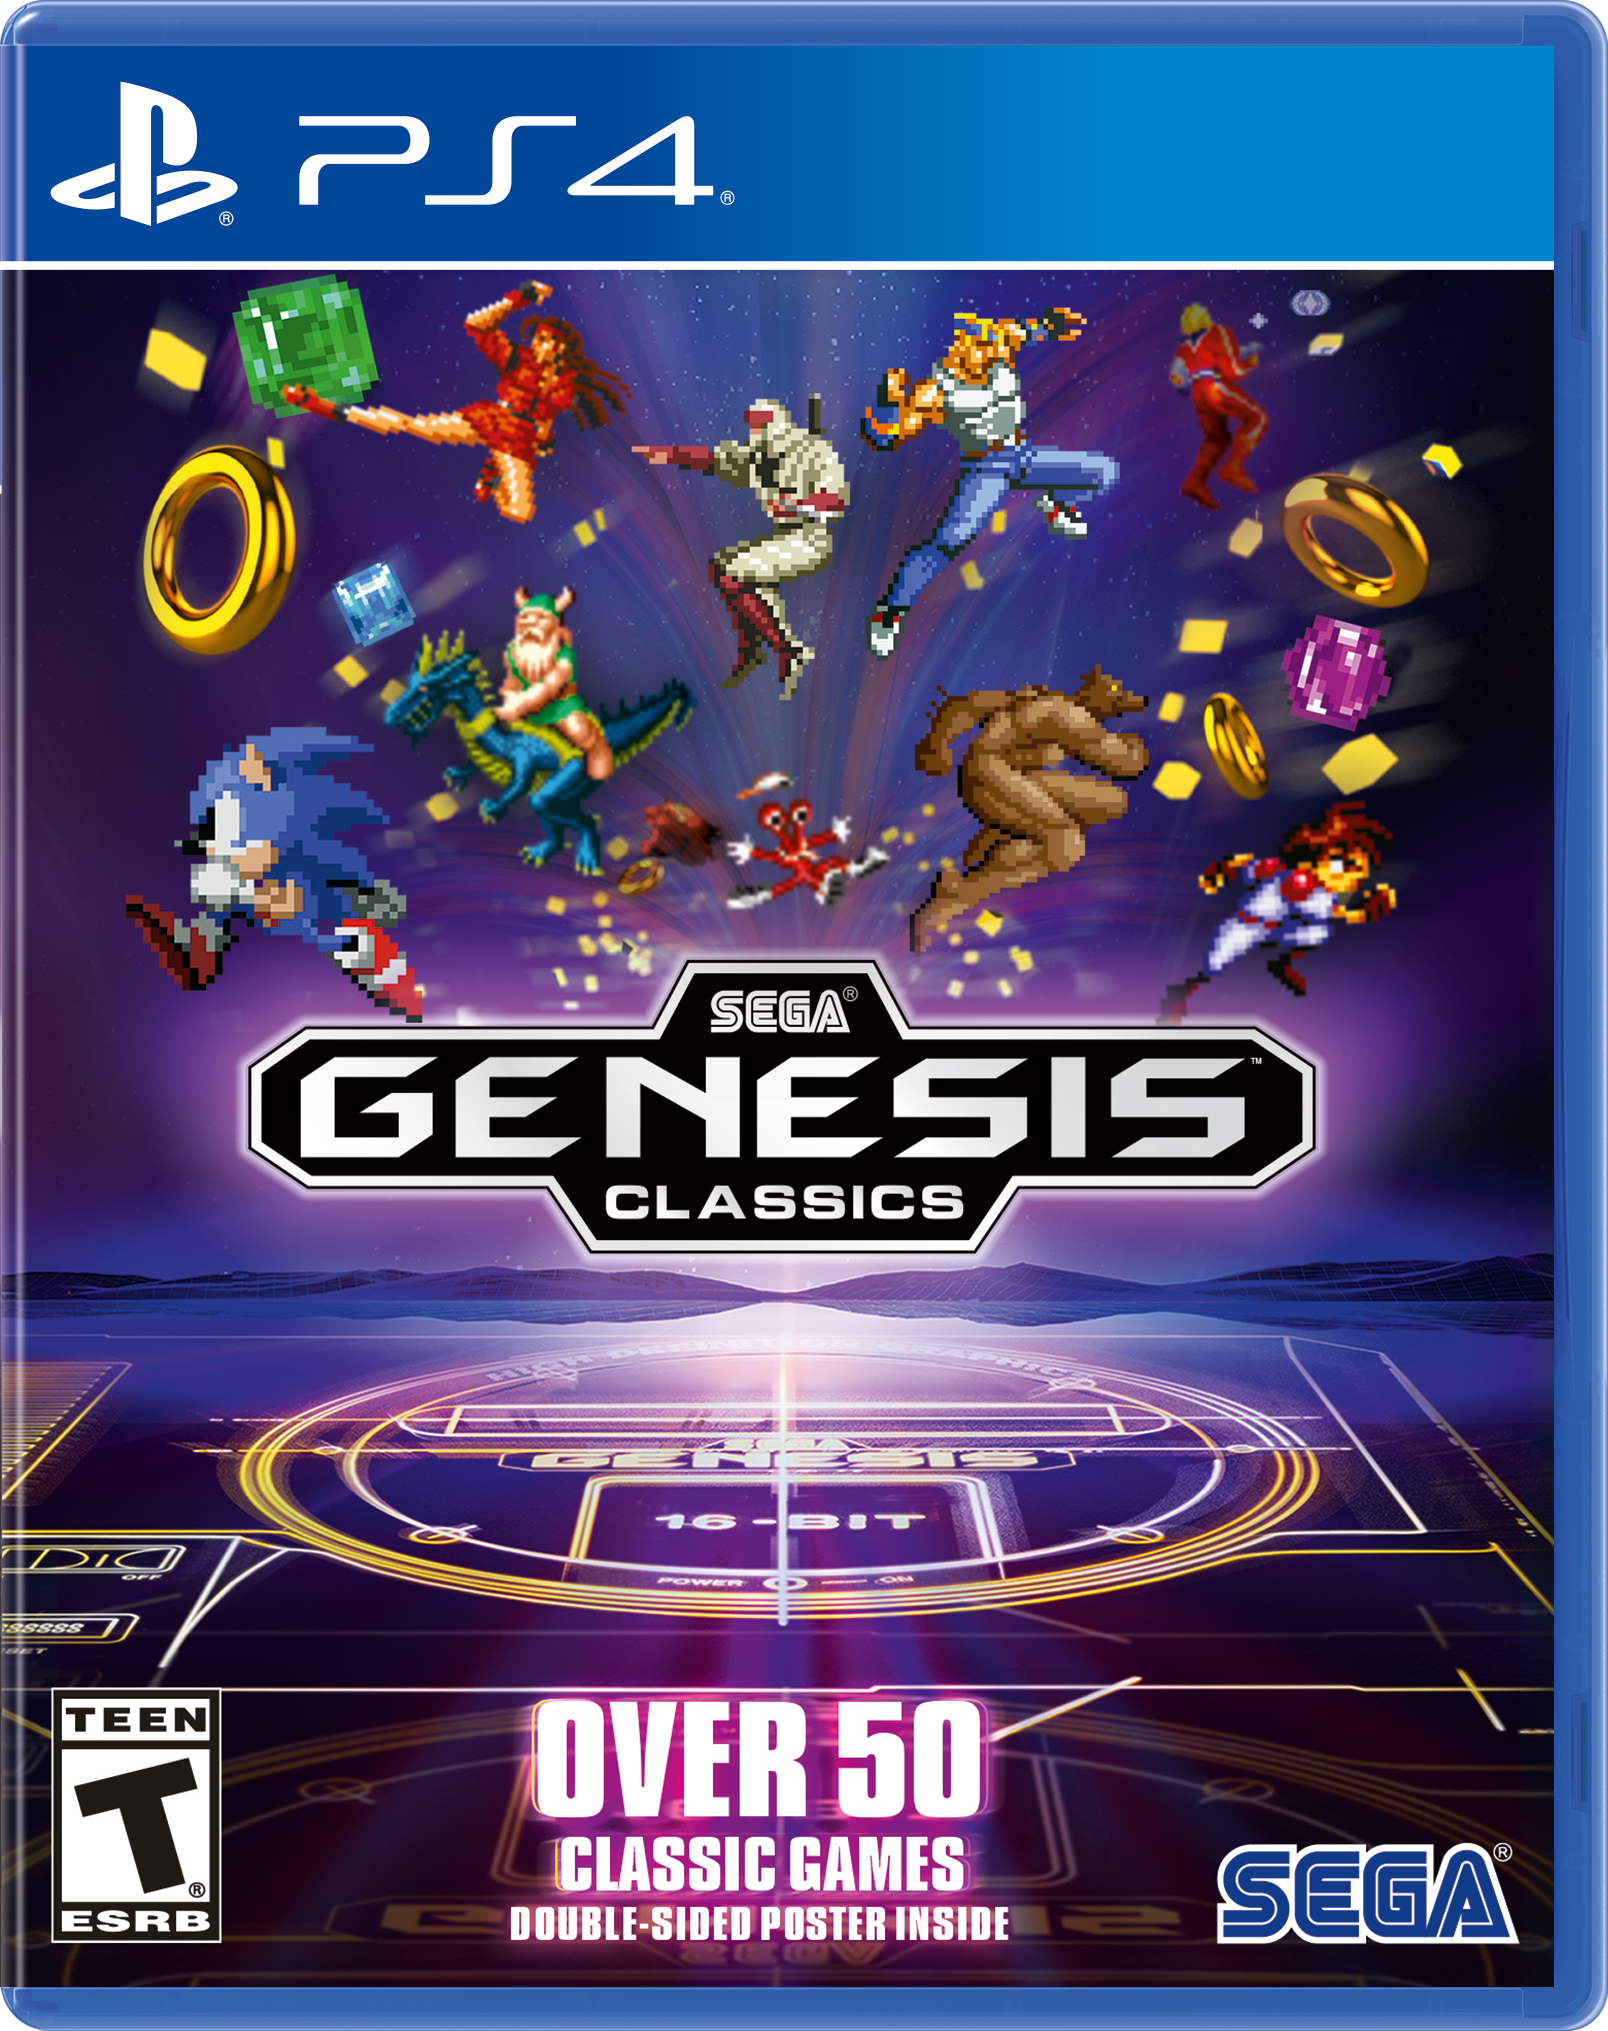 sega genesis classics switch game list download free